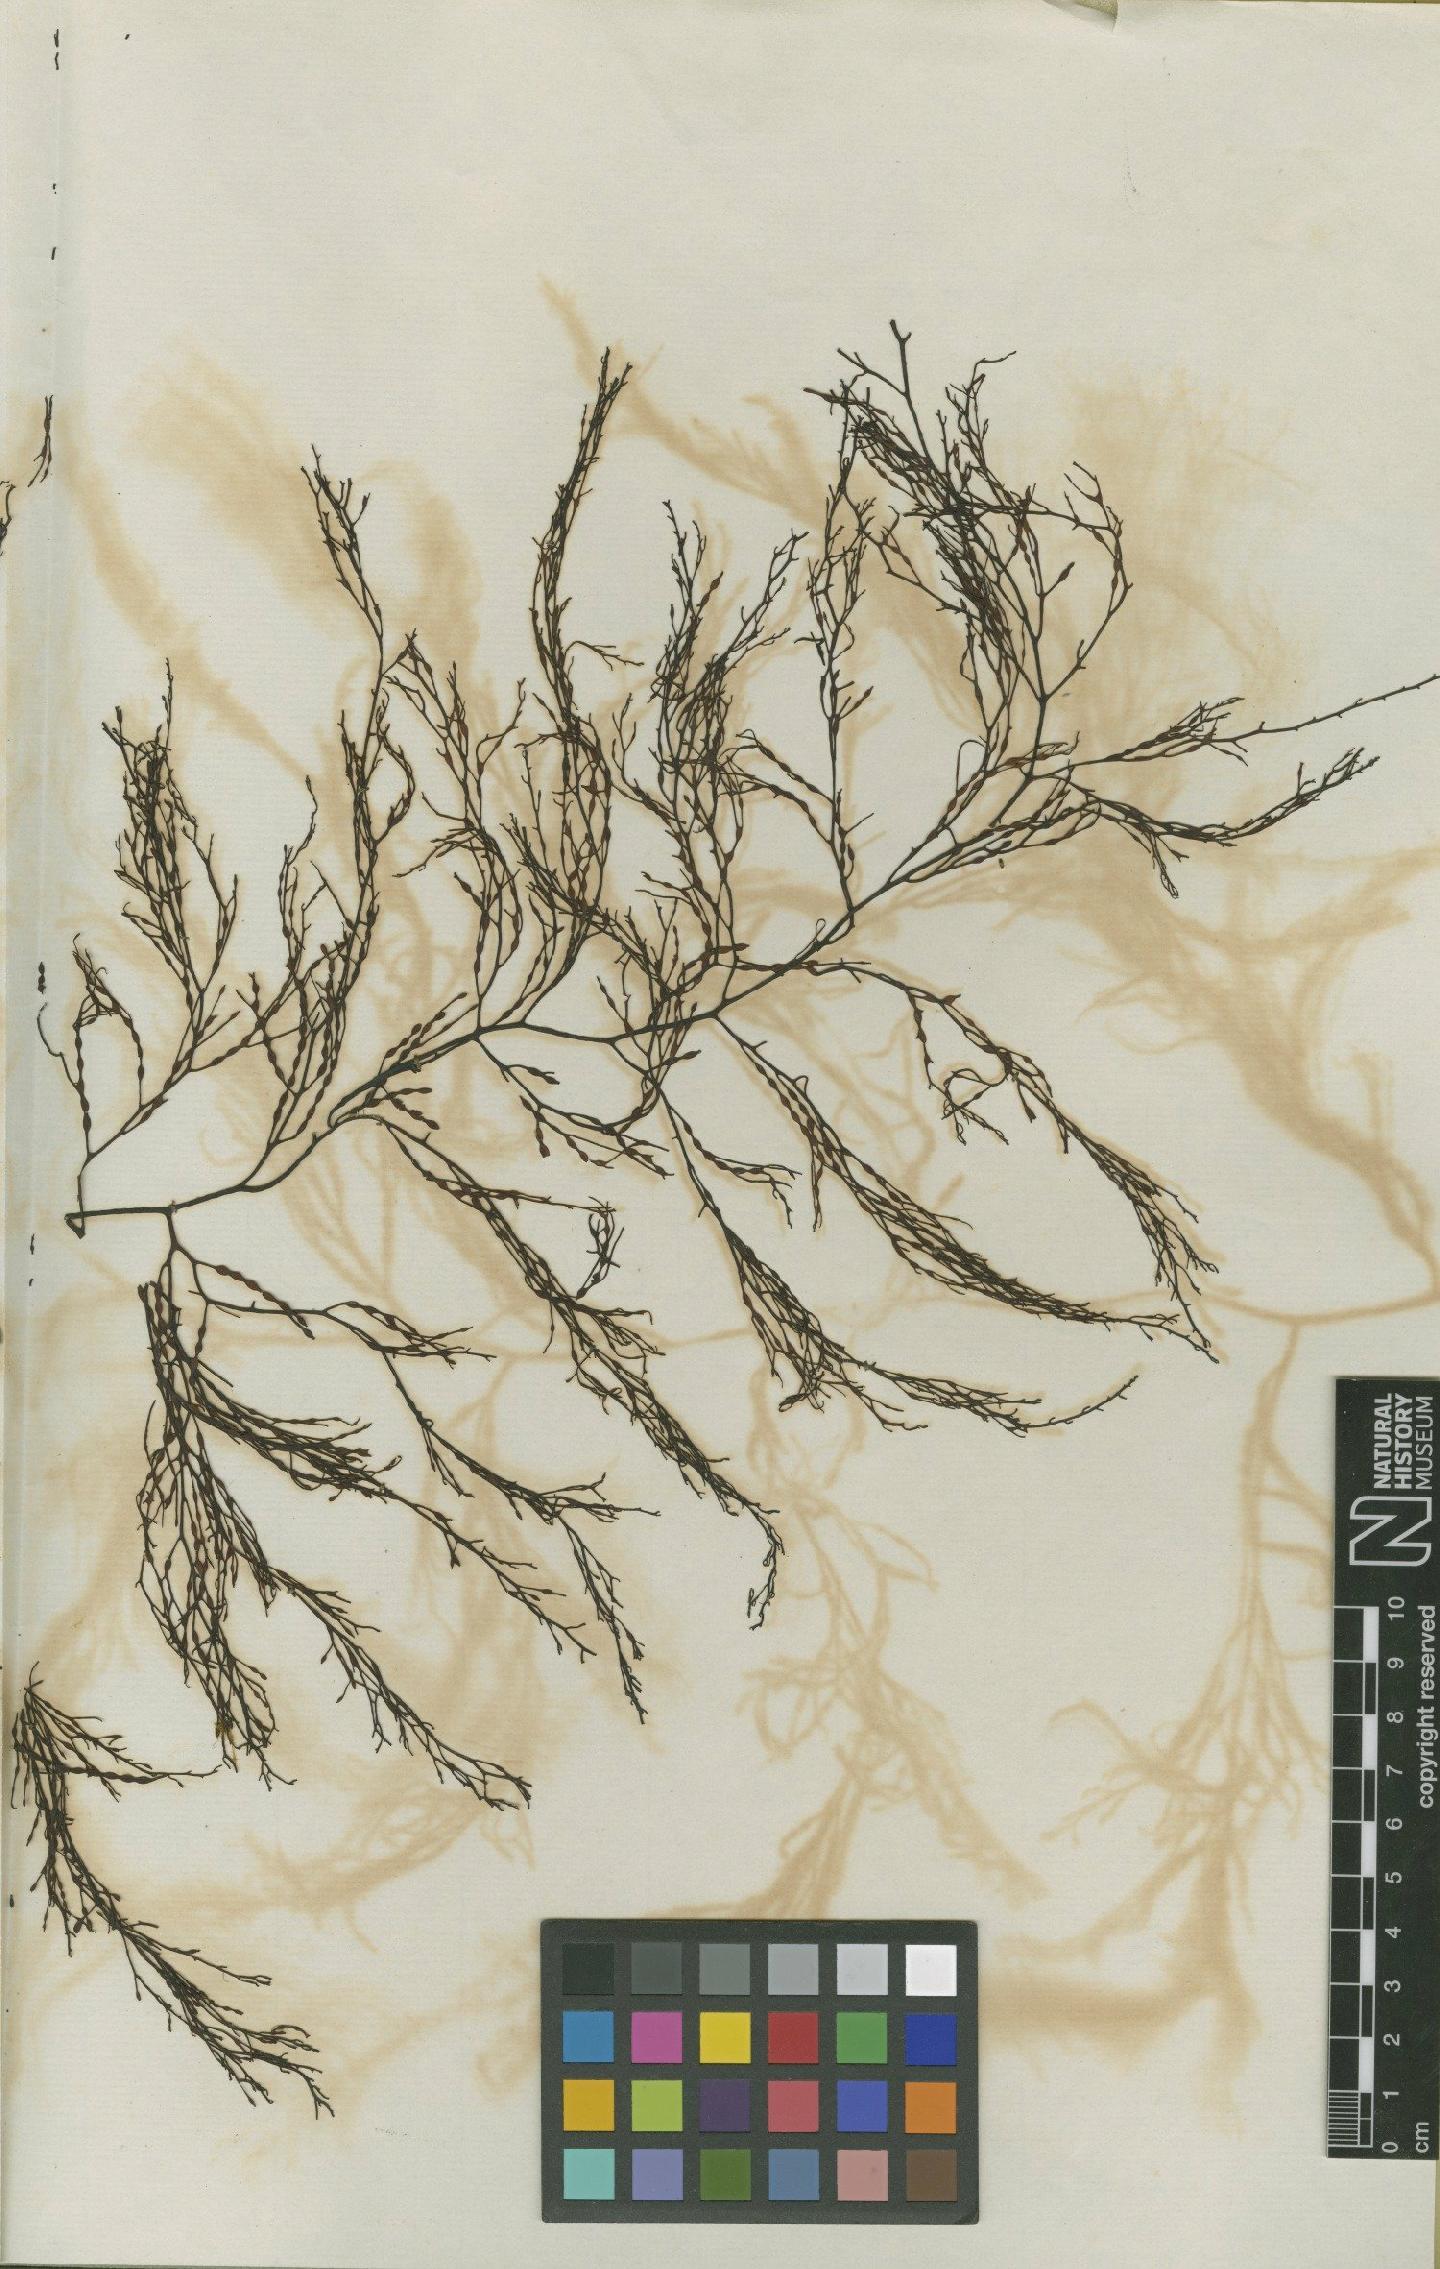 To NHMUK collection (Cystoseira osmundacea (Turner) J.Agardh; Isotype; NHMUK:ecatalogue:4723113)